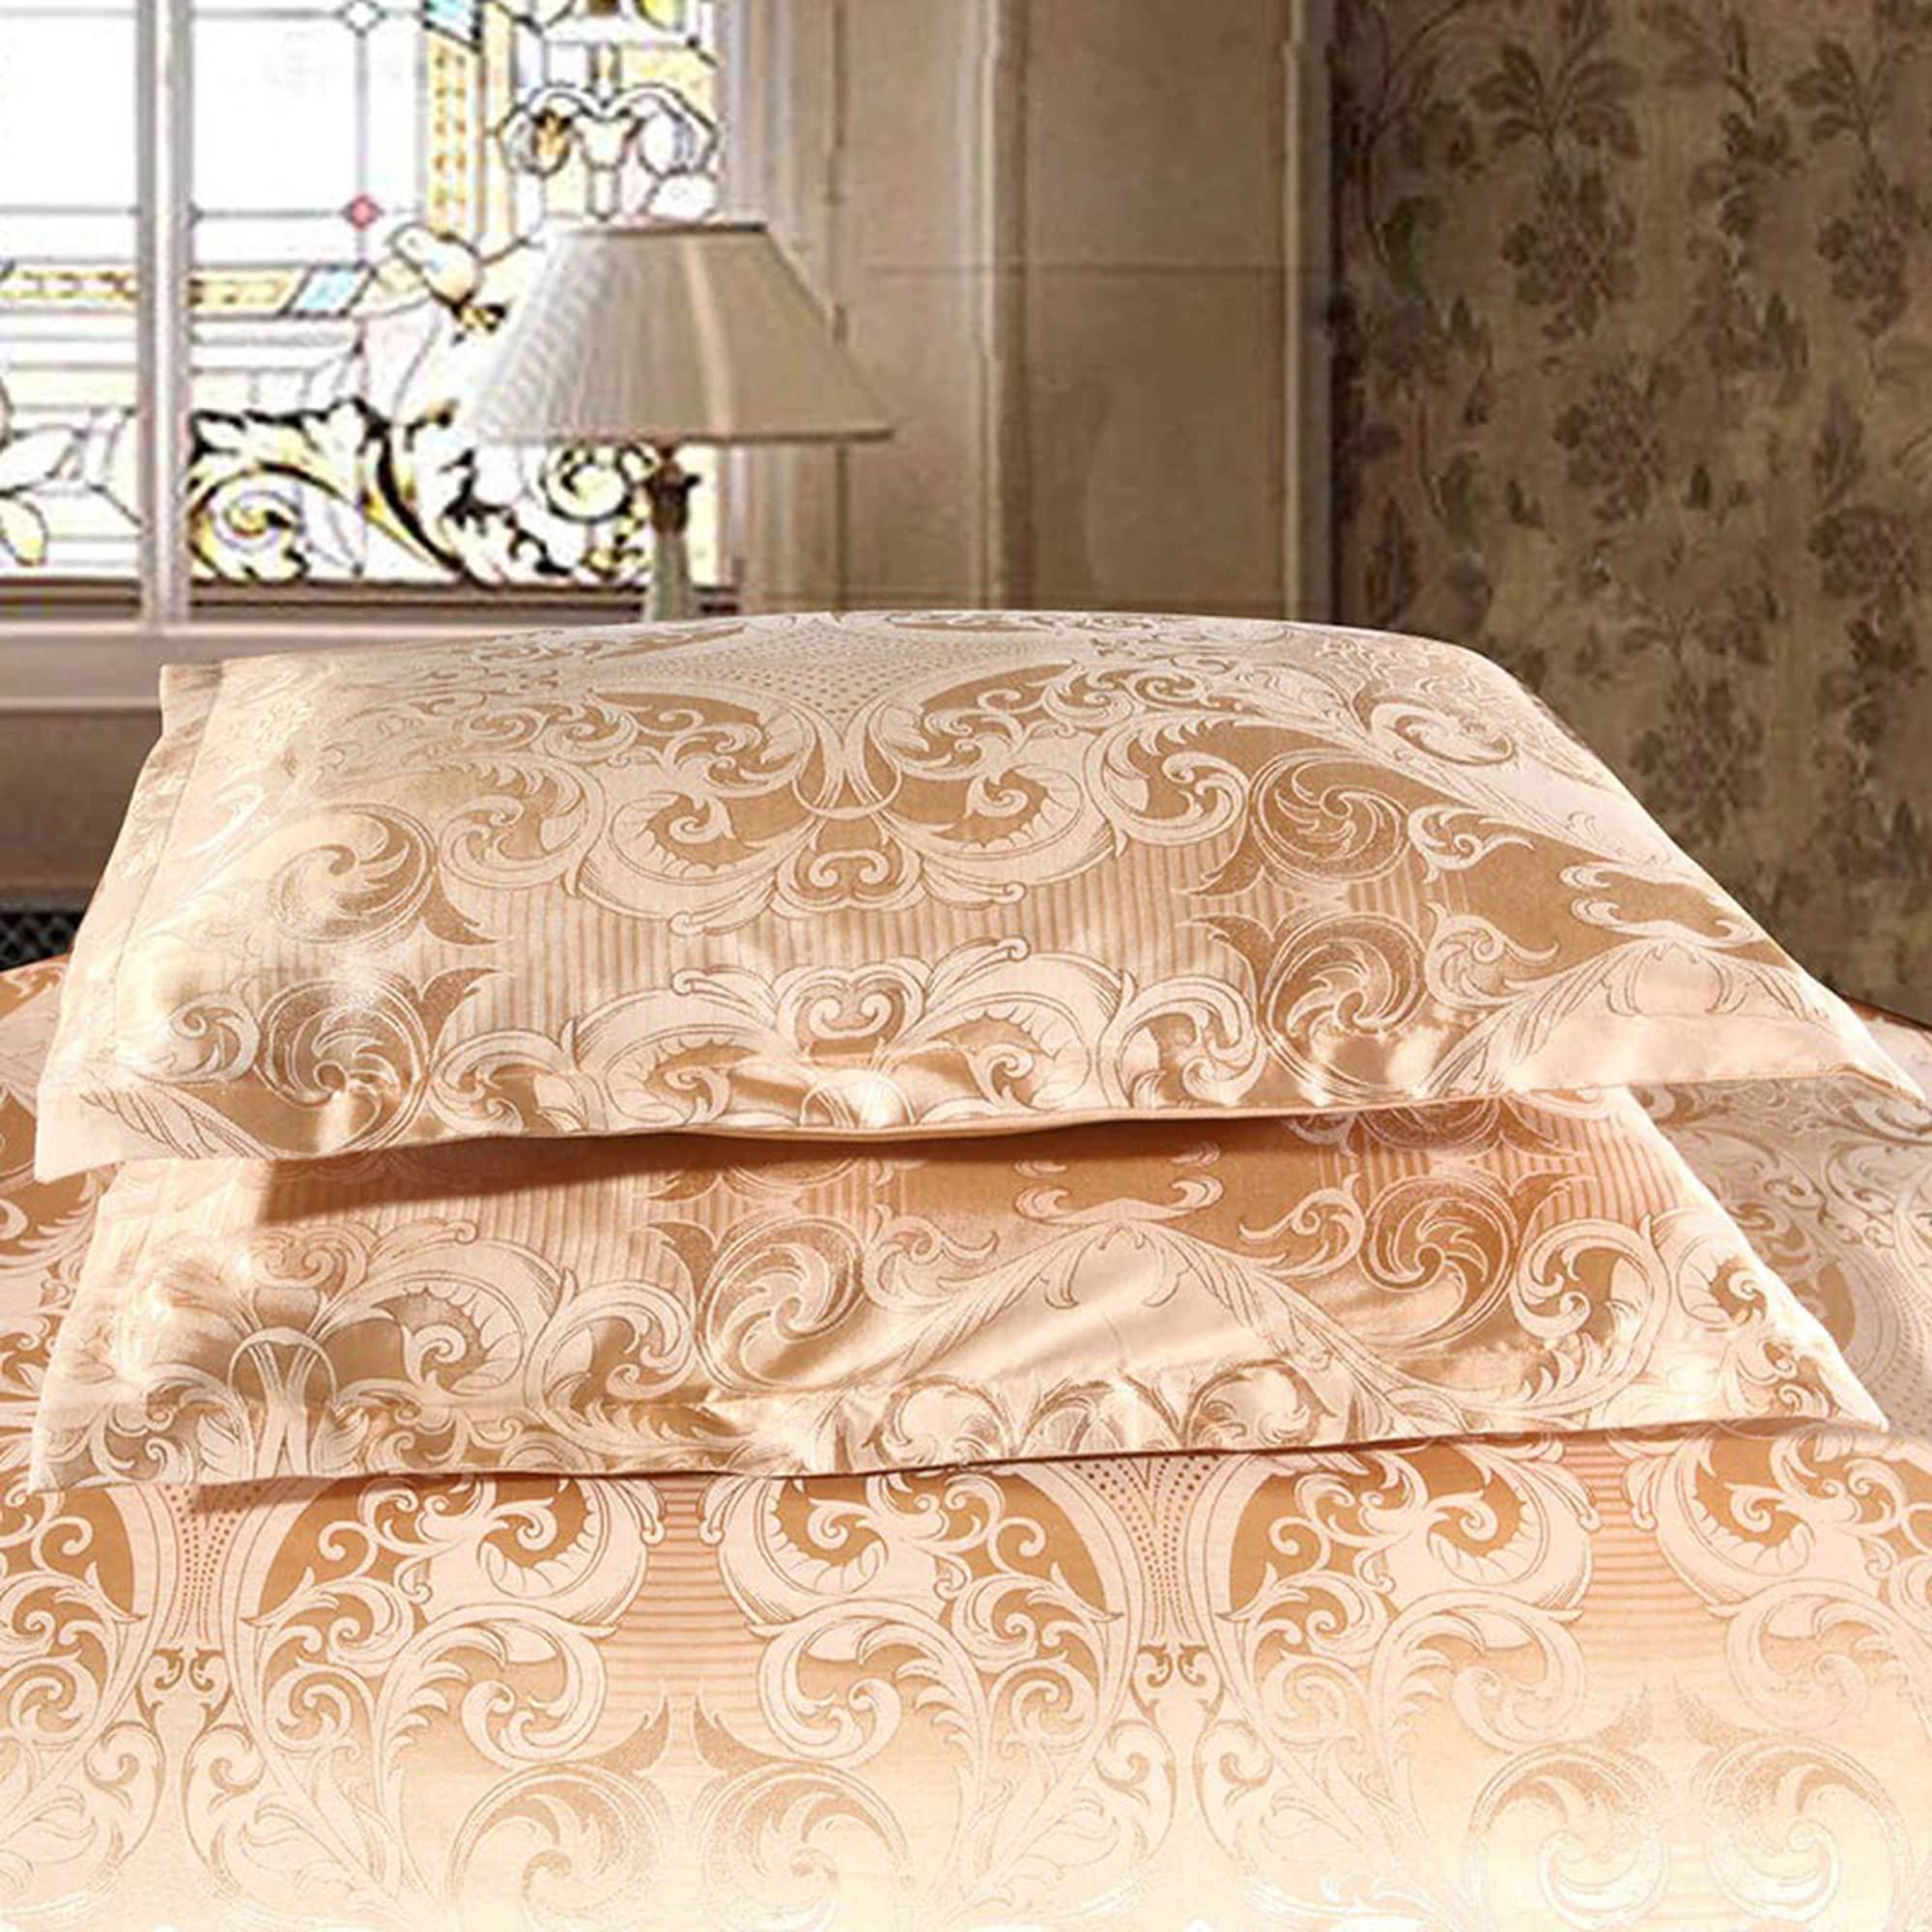 daintyduvet Beige Luxury Bedding made with Silky Jacquard Fabric, Damask Duvet Cover Set, Designer Bedding, Aesthetic Duvet King Queen Full Twin